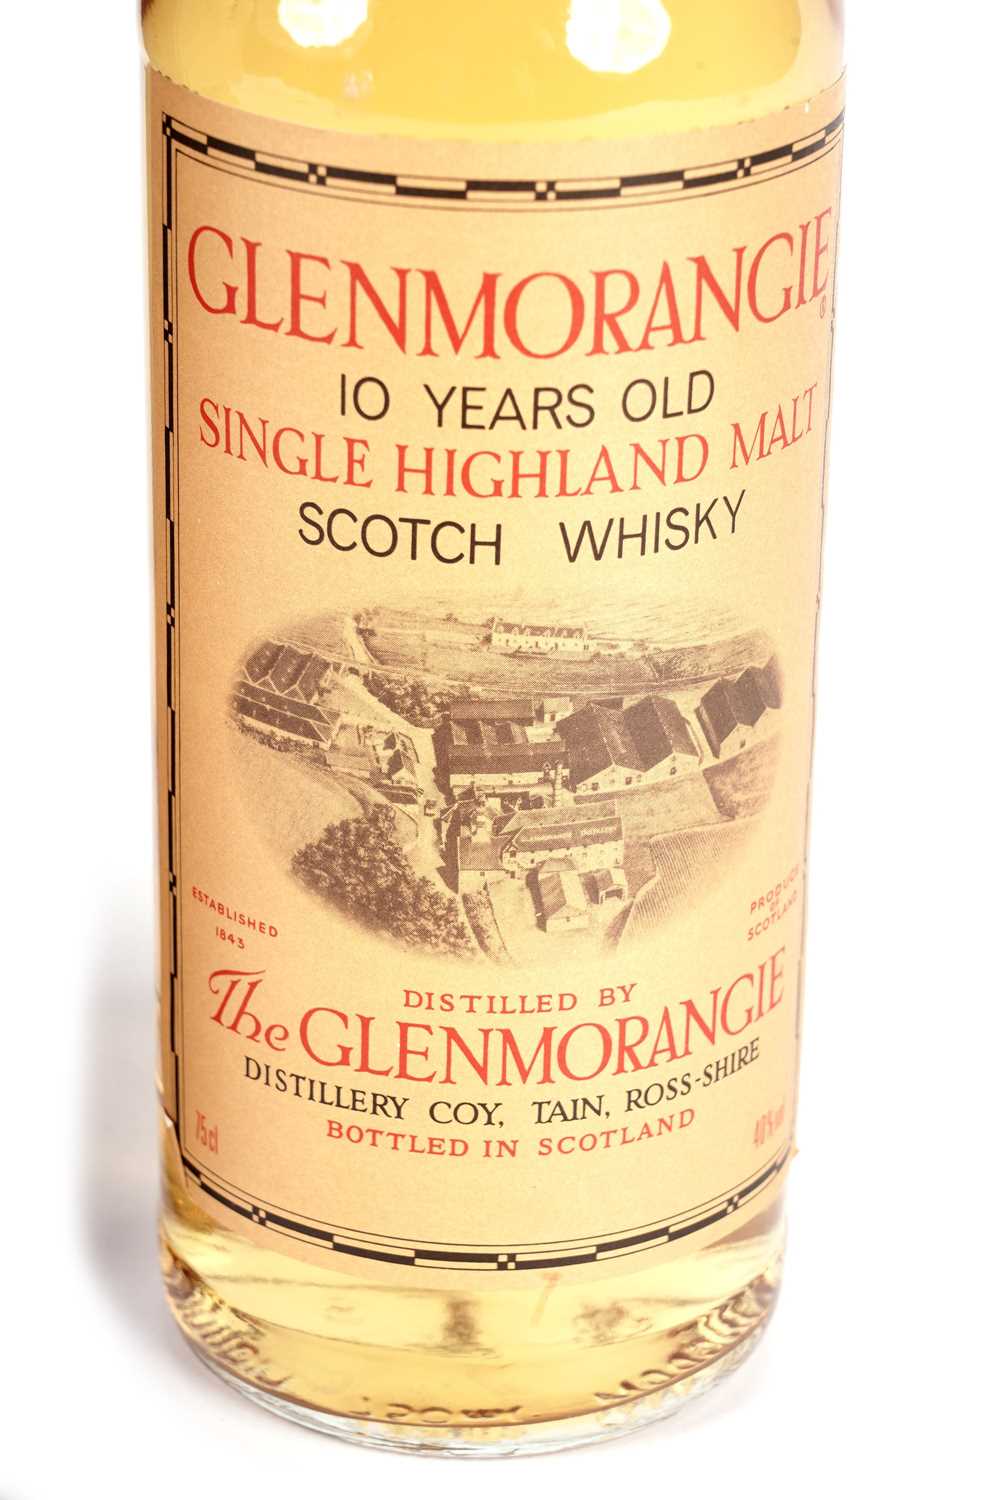 A bottle of Glenmorangie Single Highland Malt Scotch Whisky - Image 2 of 4